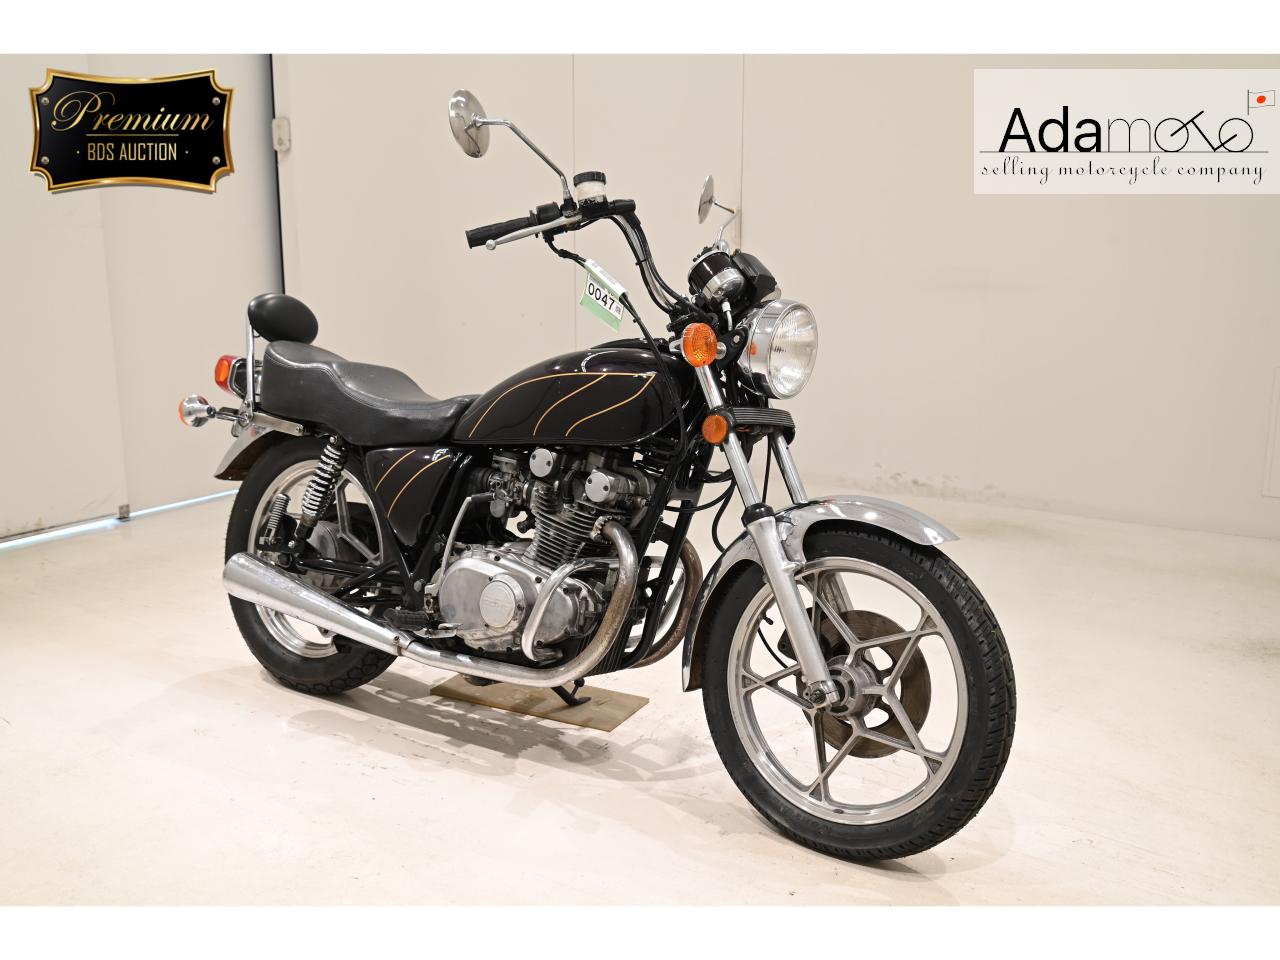 Suzuki GS400L - Adamoto - Motorcycles from Japan